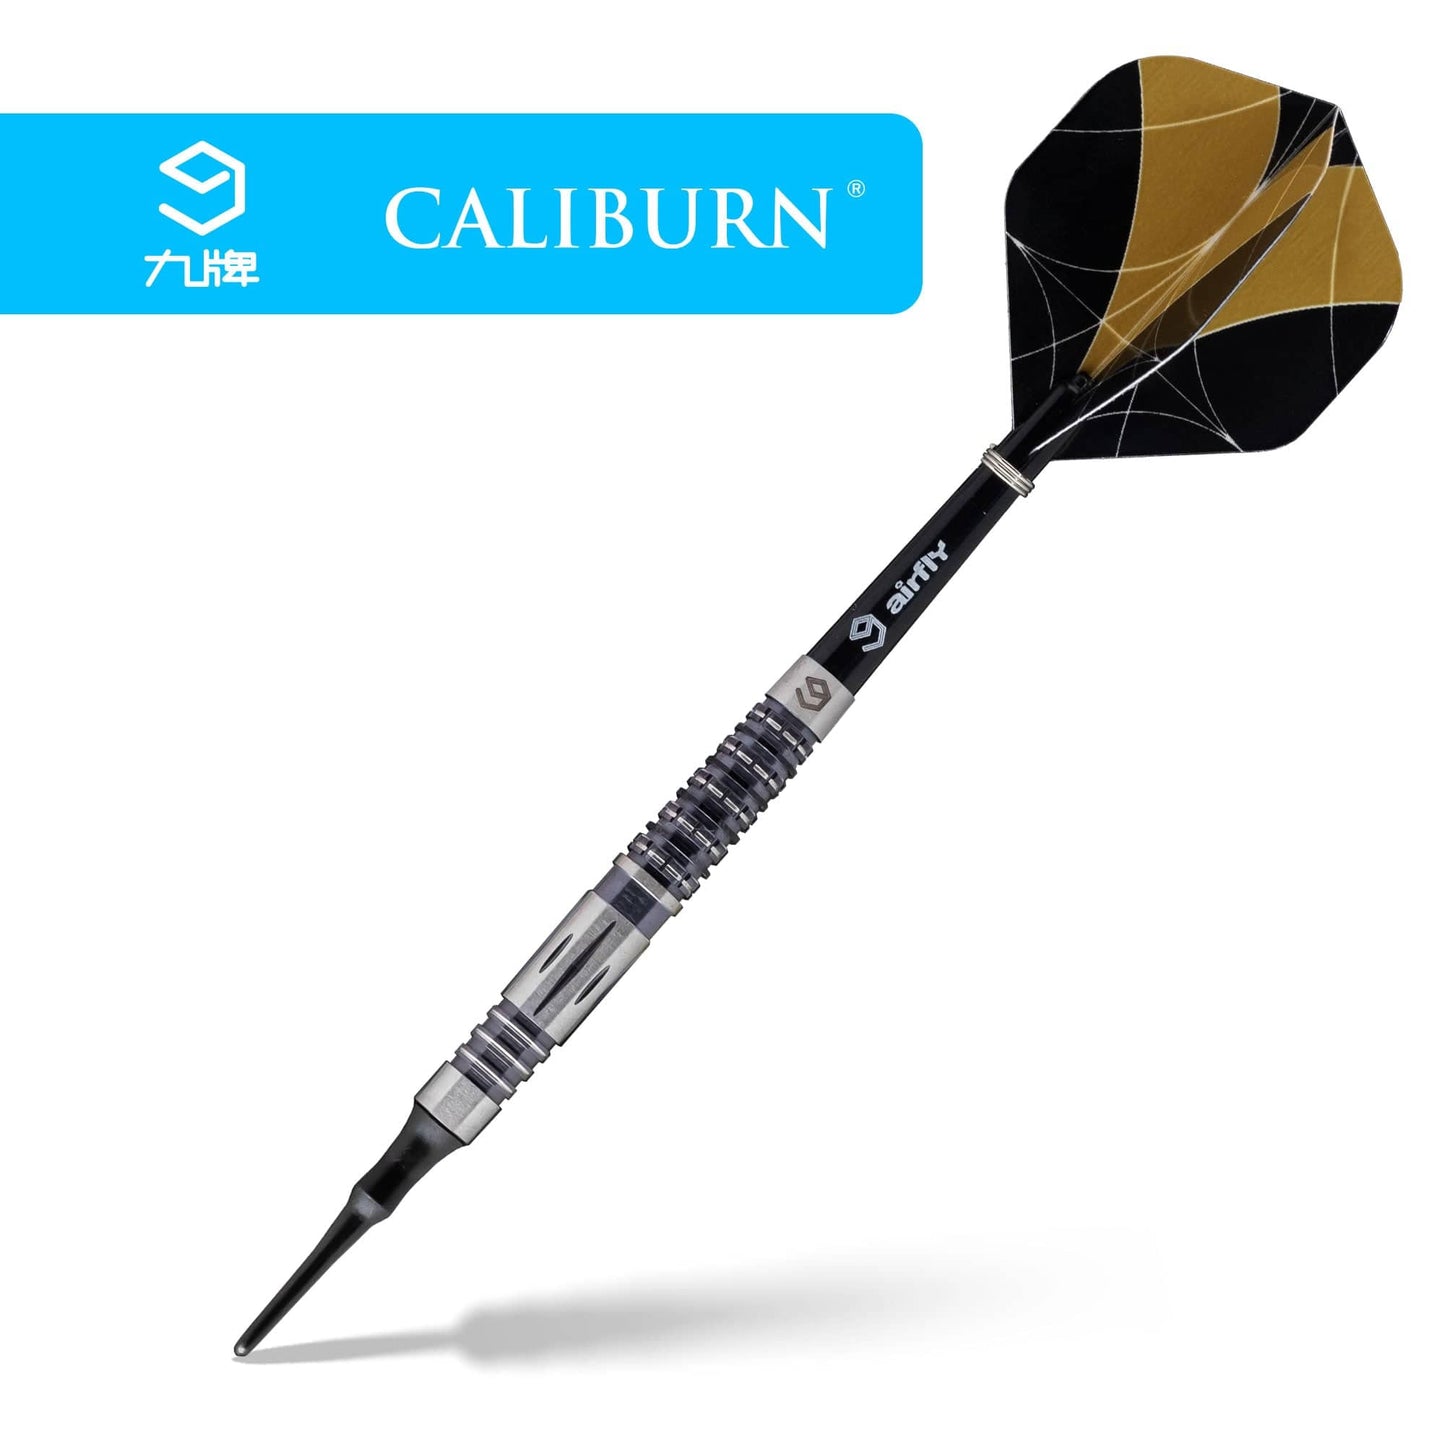 Caliburn Nights Watch Darts - Soft Tip - 95% - N1 - Black